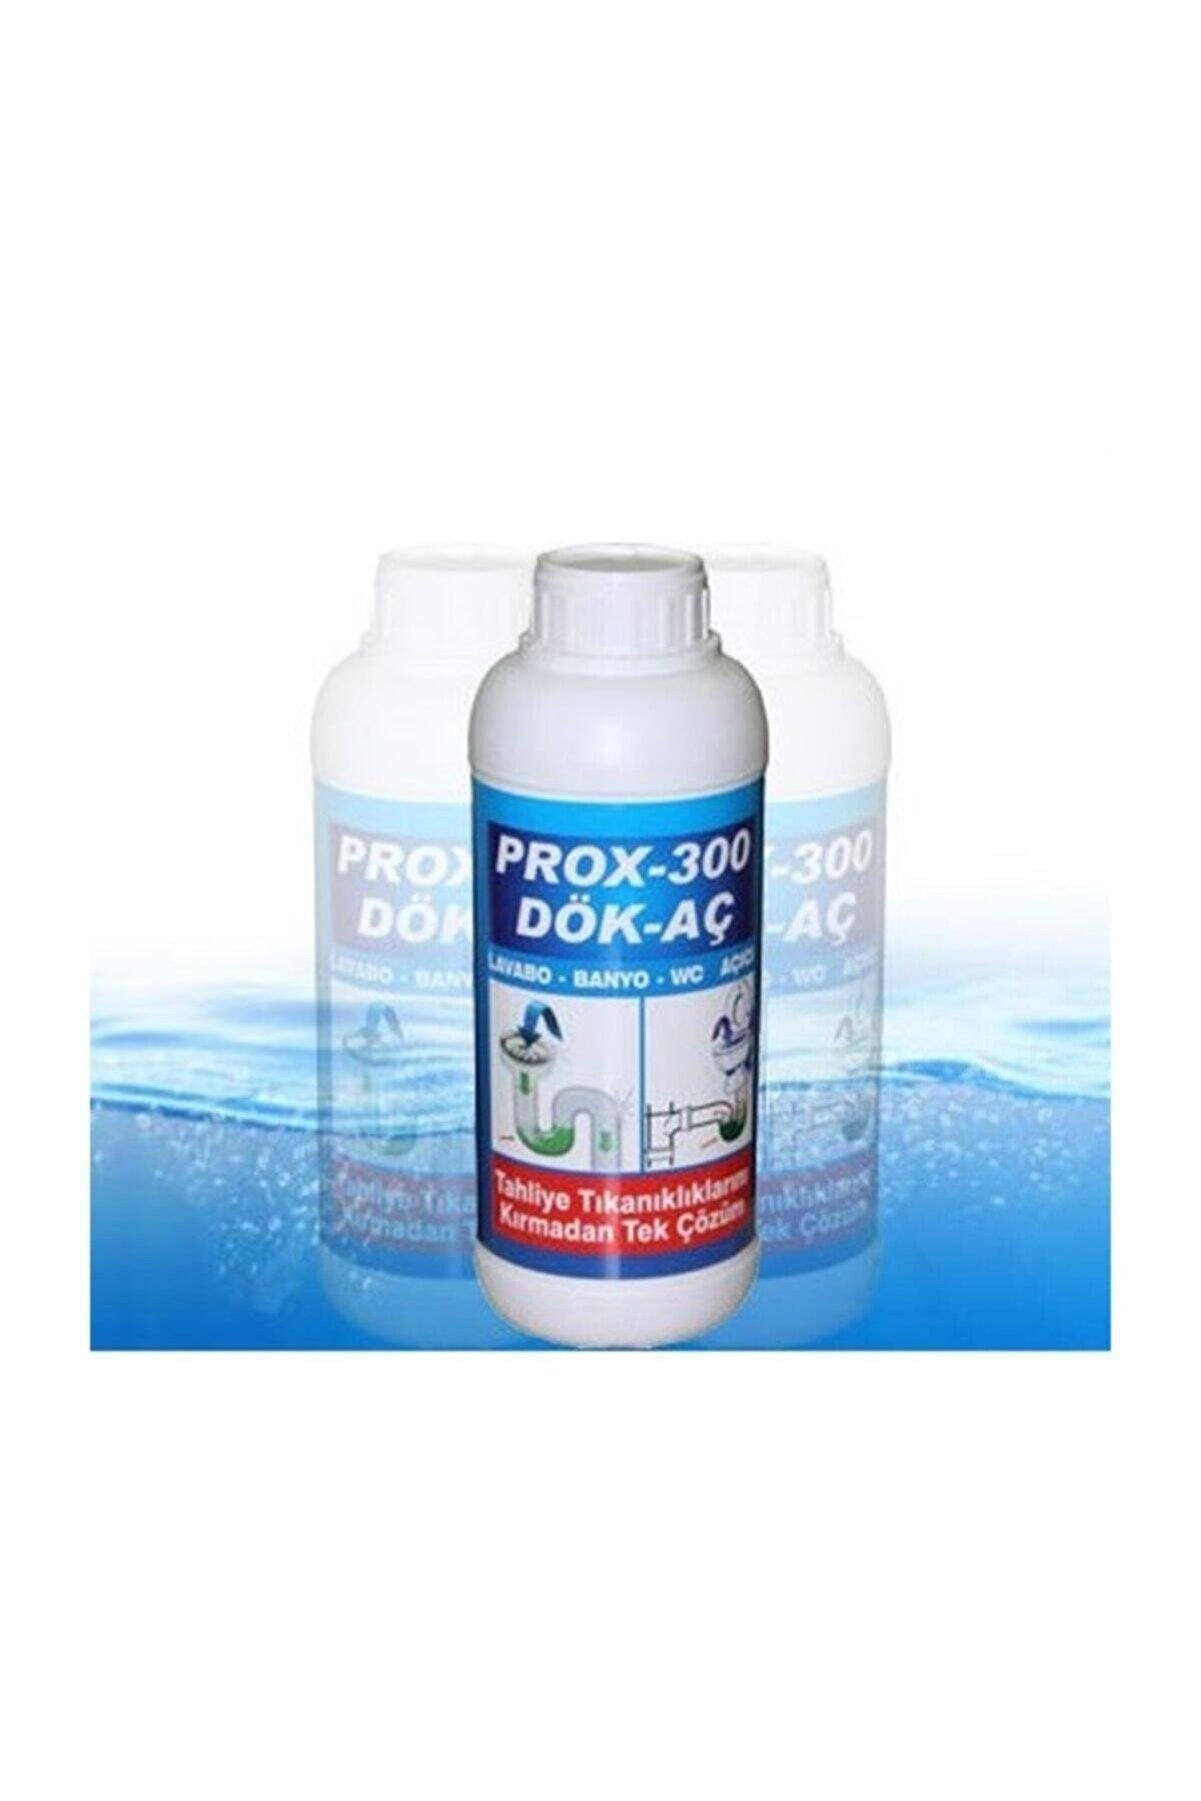 Prox-300 Dök - Aç - Lavabo Banyo Wc Gider Açıcı 2000 Gr